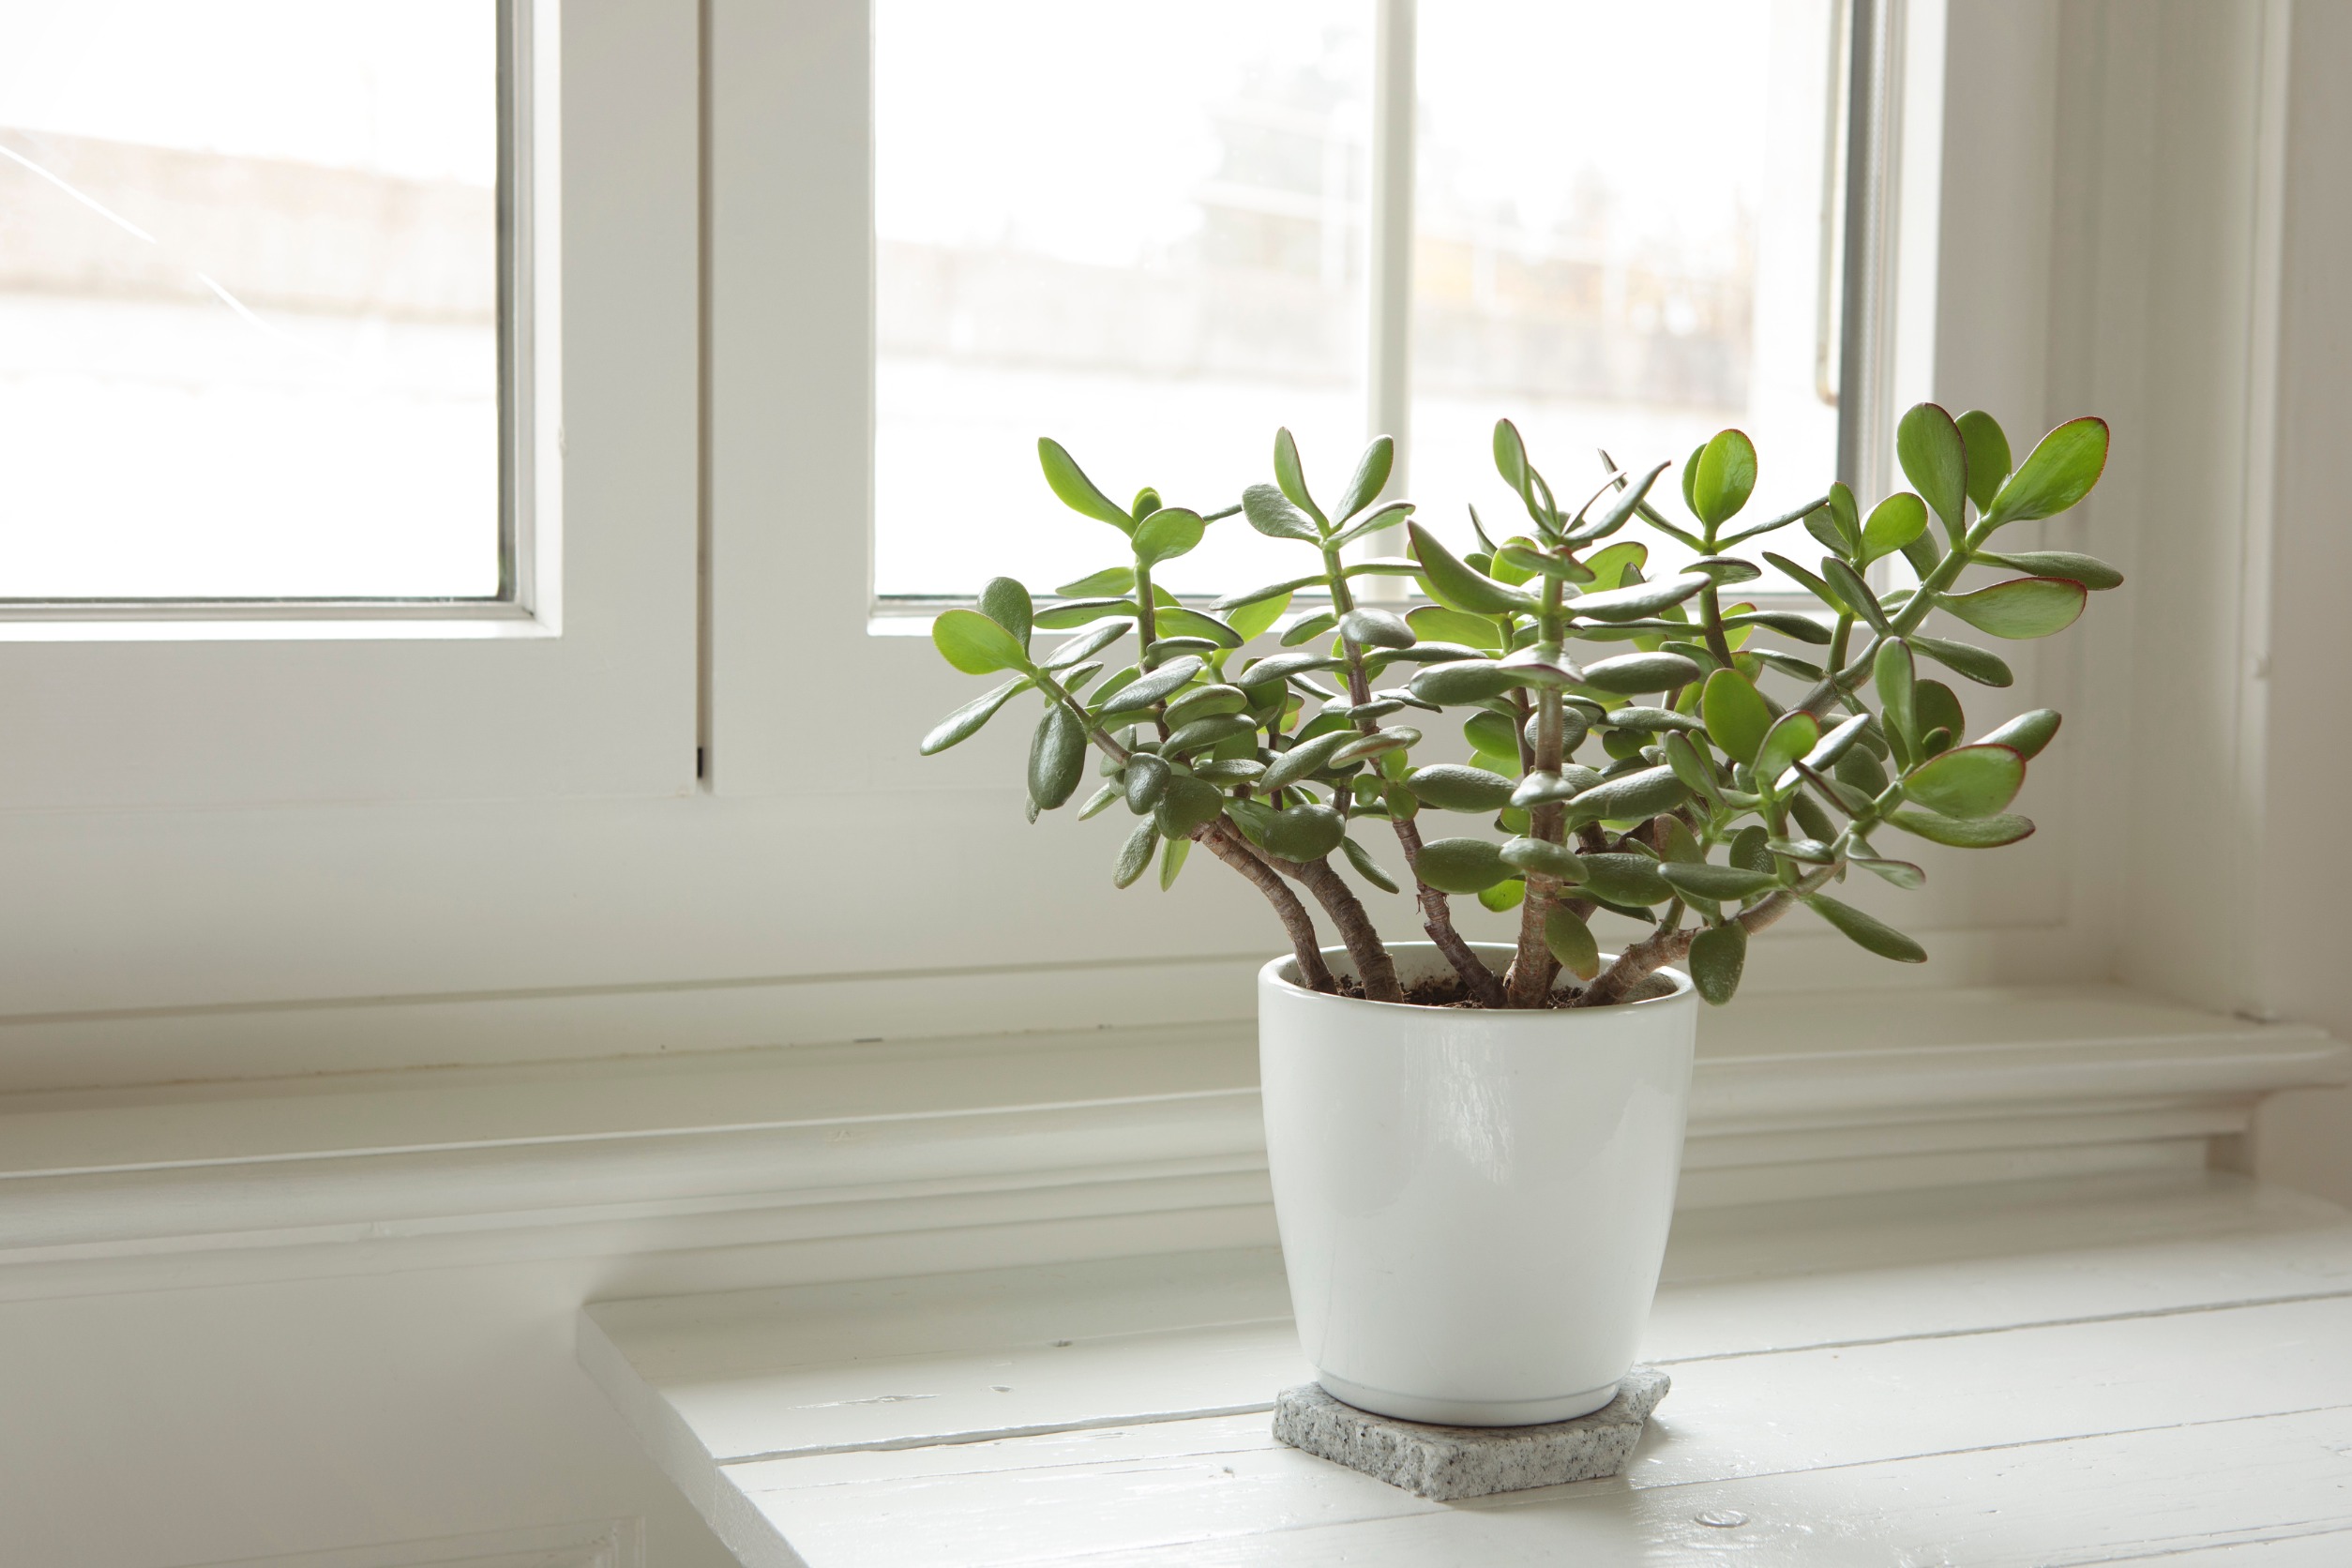 A Jade houseplant sitting in a windowsill.